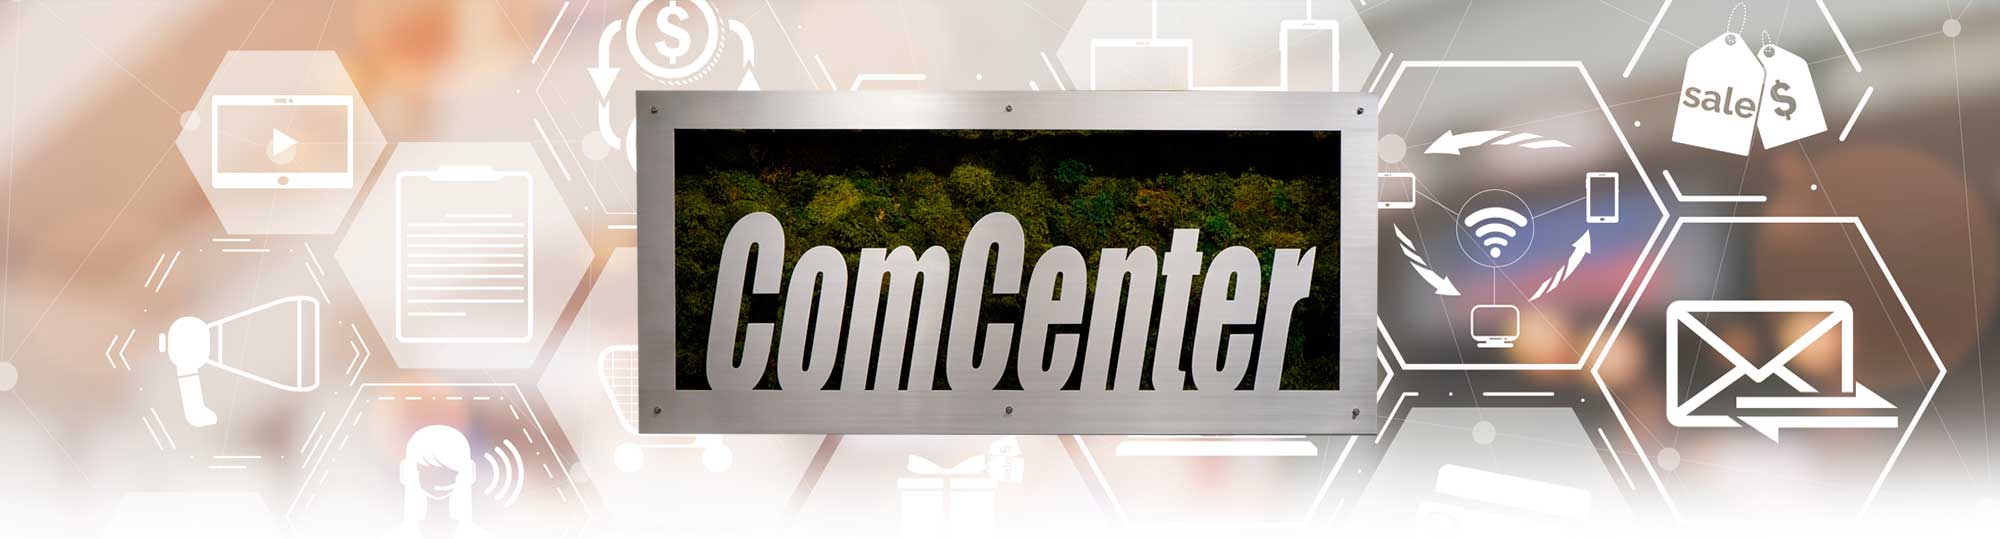 comcenter-blog-posts-2